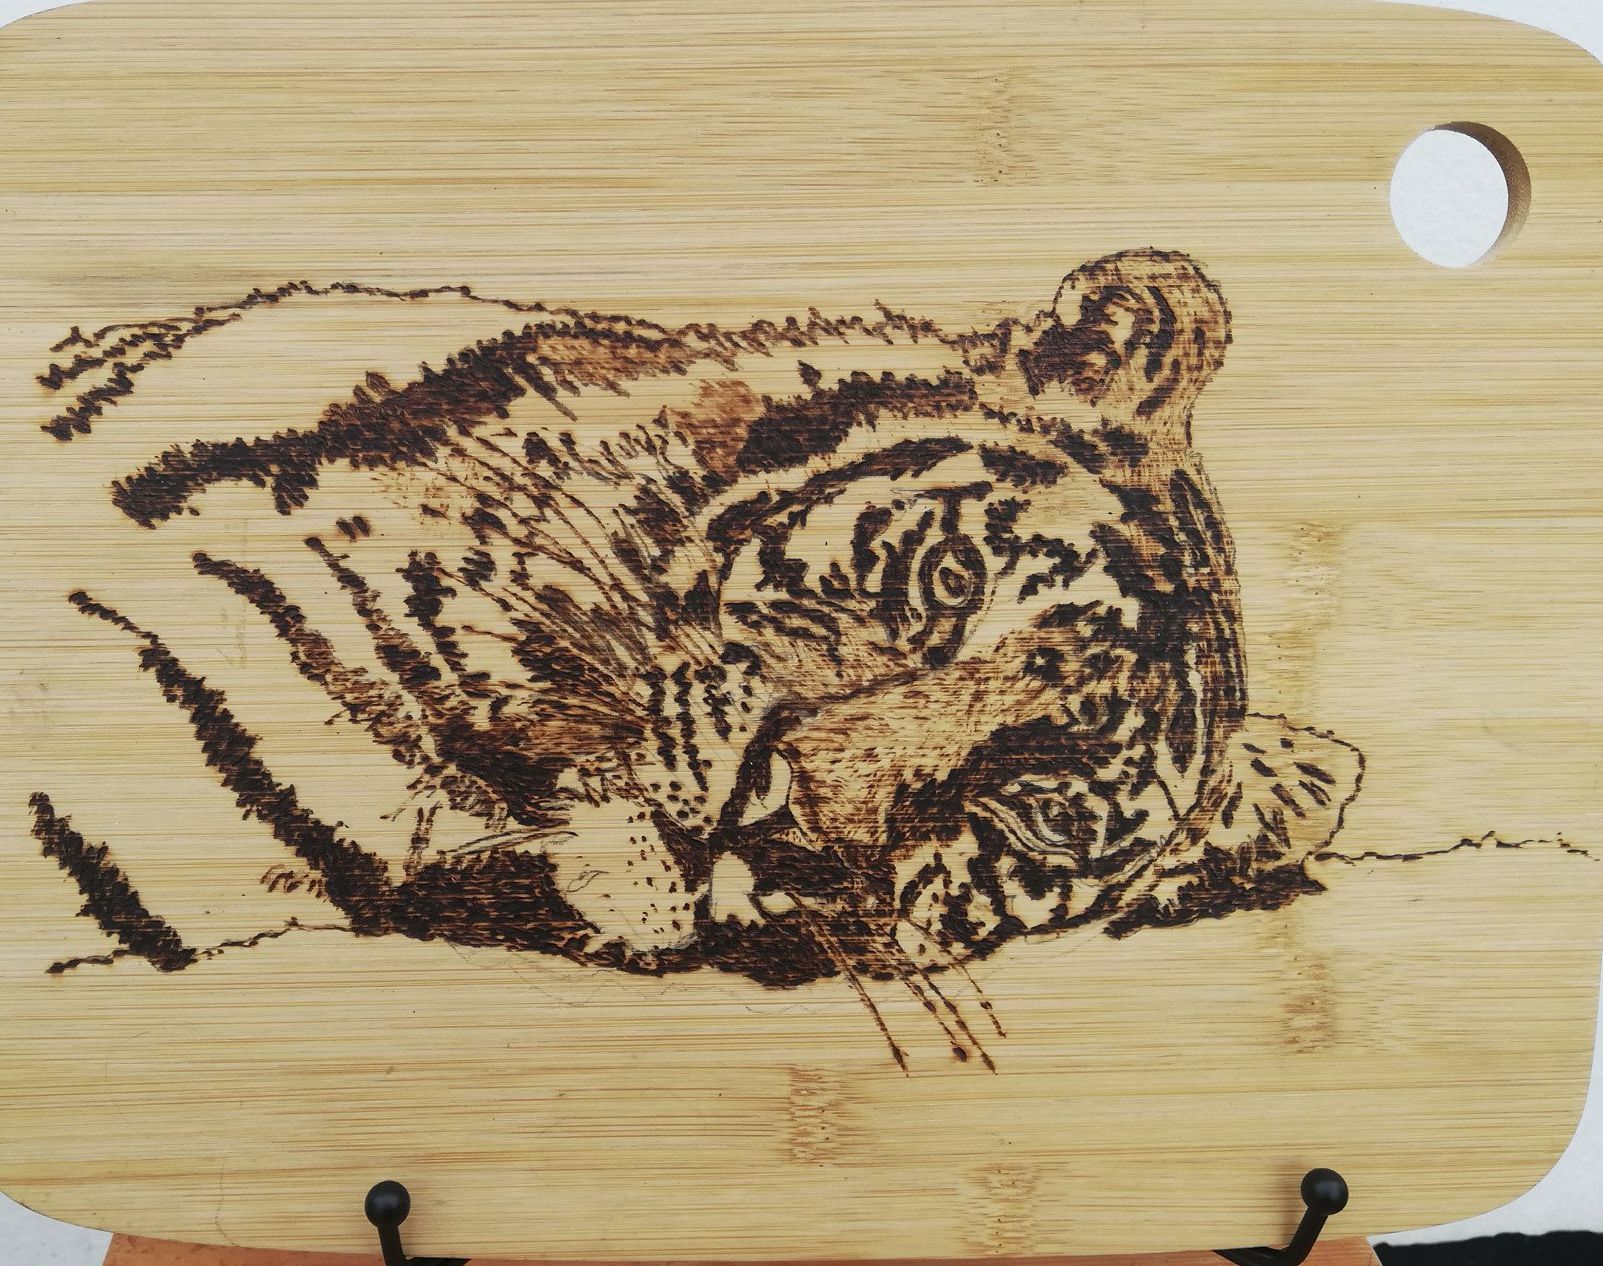 resting, tiger, sleep, board, cheeseboard, wood, pyrography, ornament